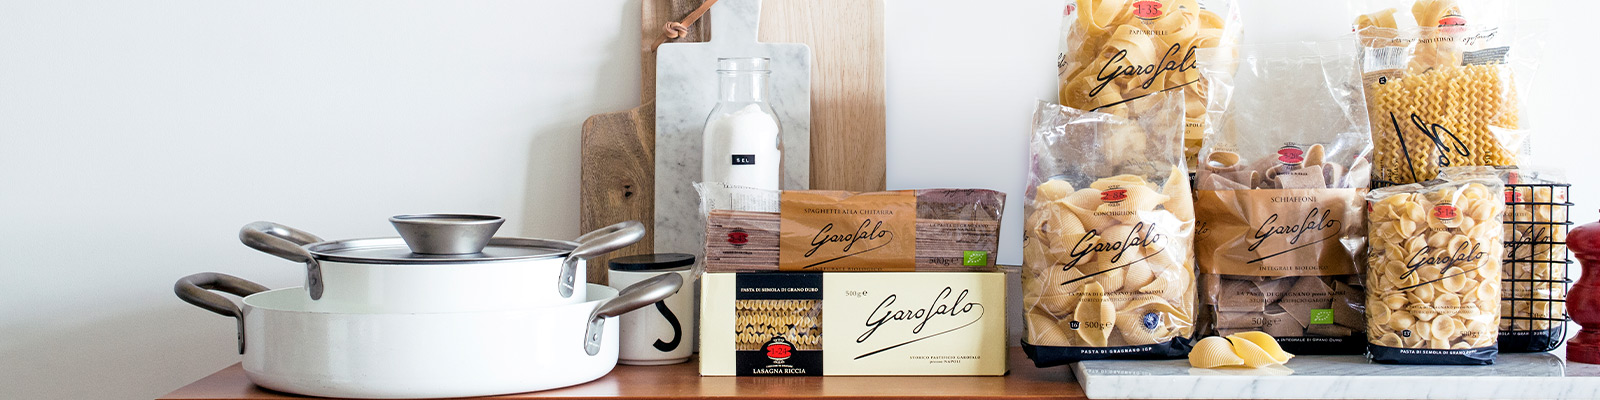 Pasta Garofalo - Produkte